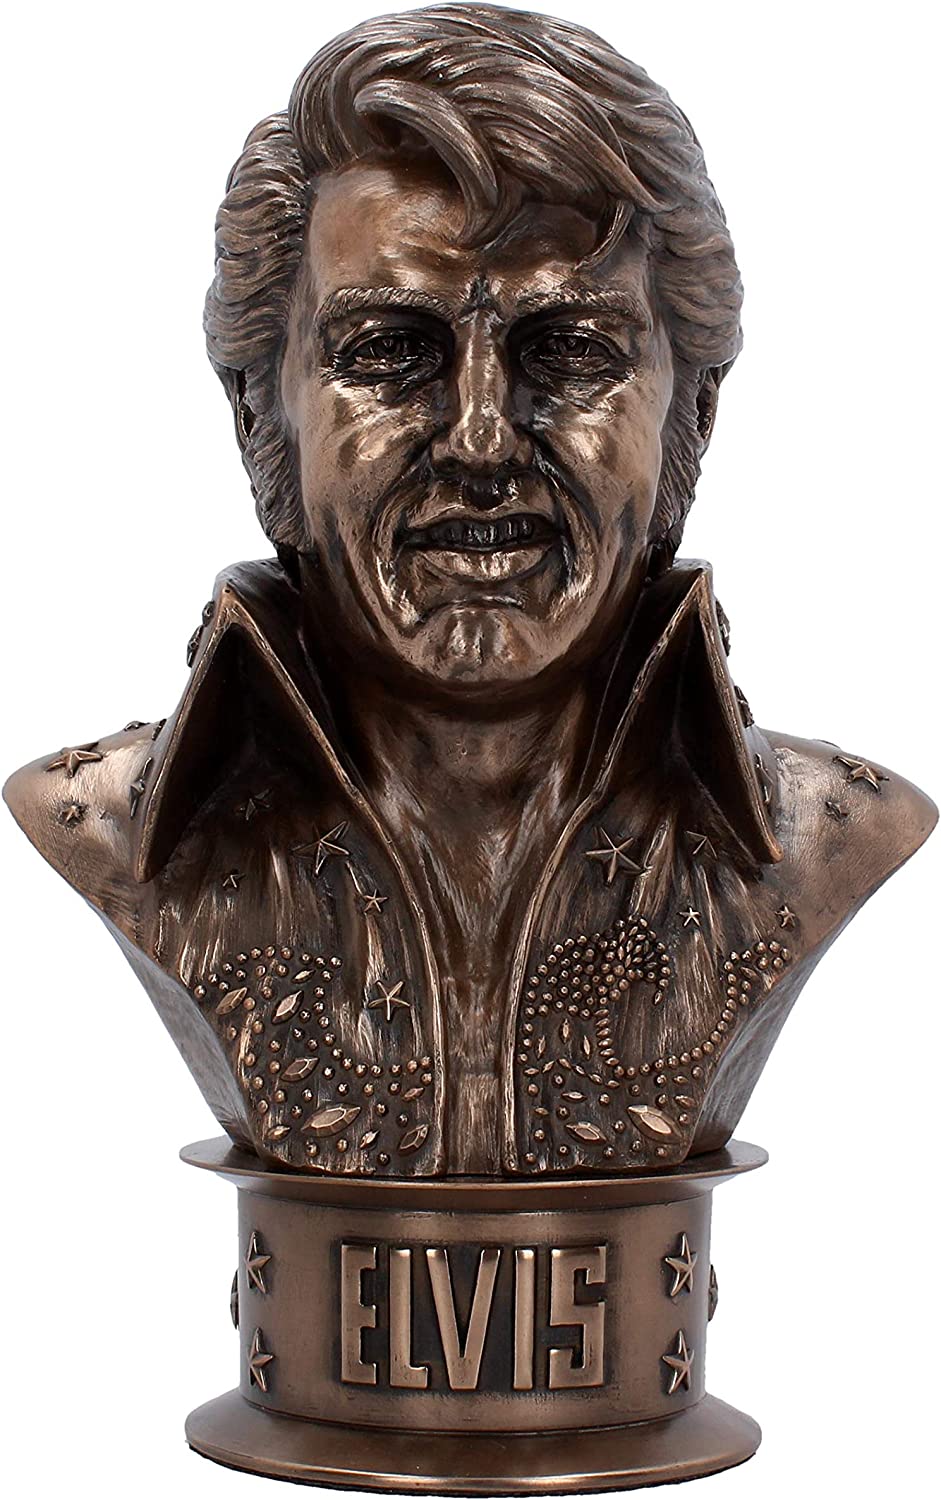 Nemesis Now Elvis Bust Figurine 33cm Bronze, Resin